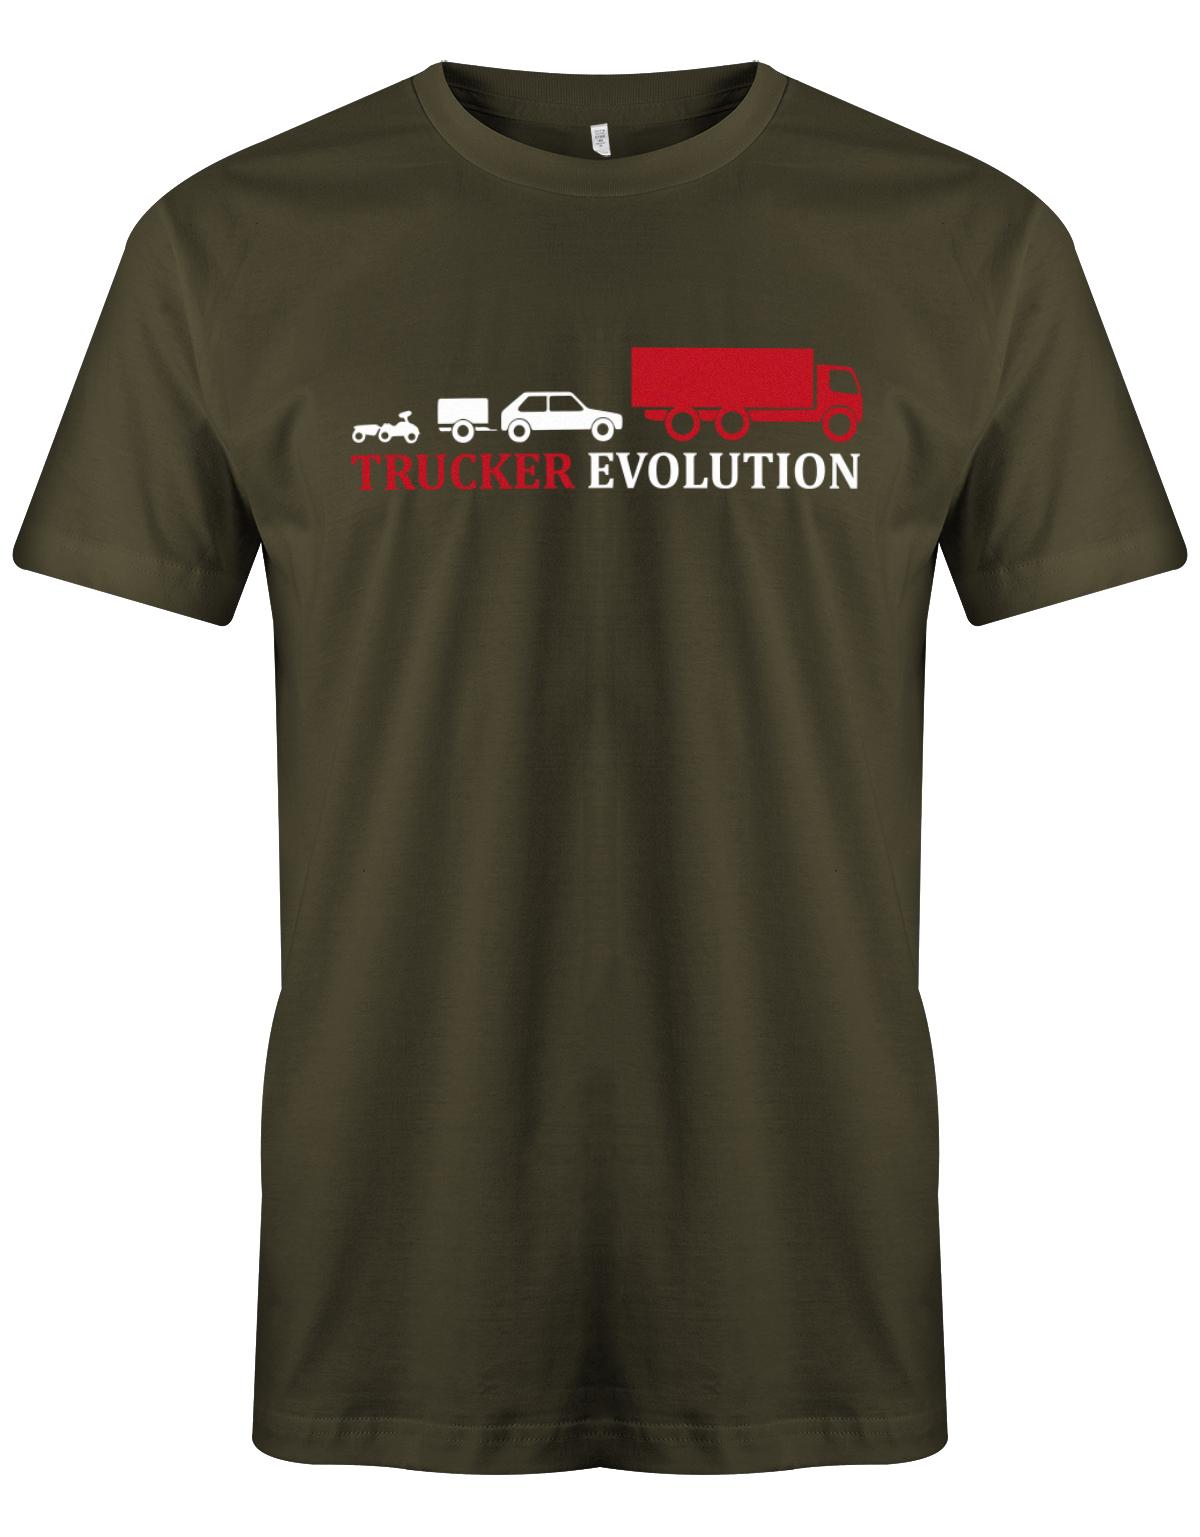 Lkw-Fahrer Shirt - Trucker Evolution Army